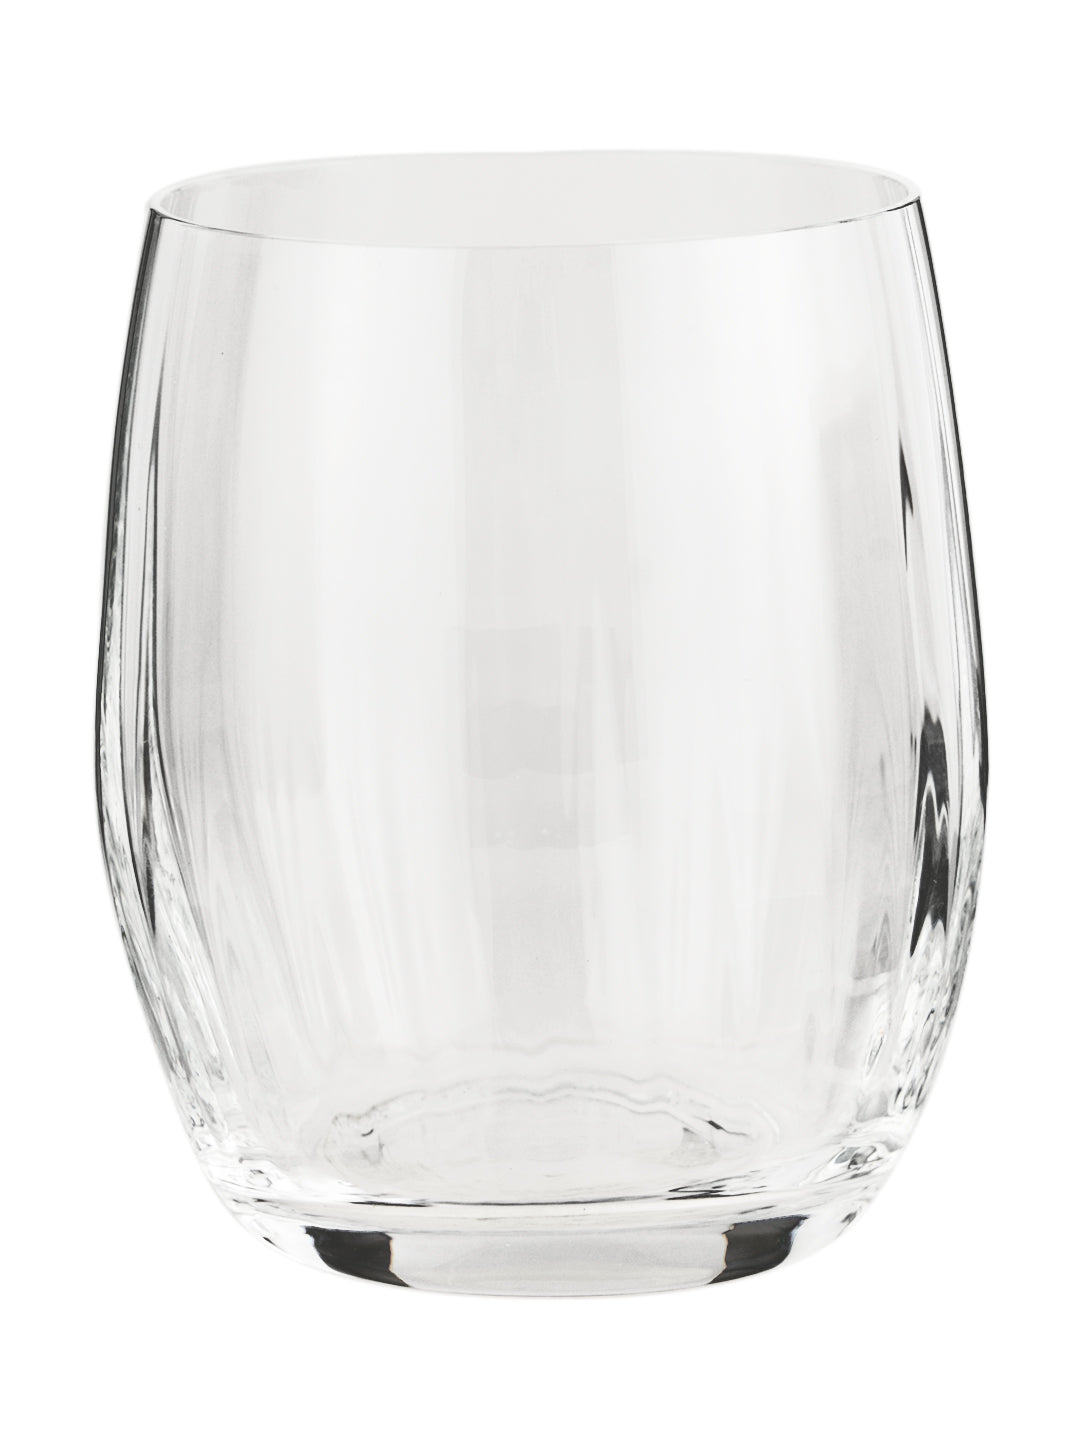 BARREL CRYSTAL WHISKEY GLASS - EUROPEAN CRYSTAL - SET OF 6